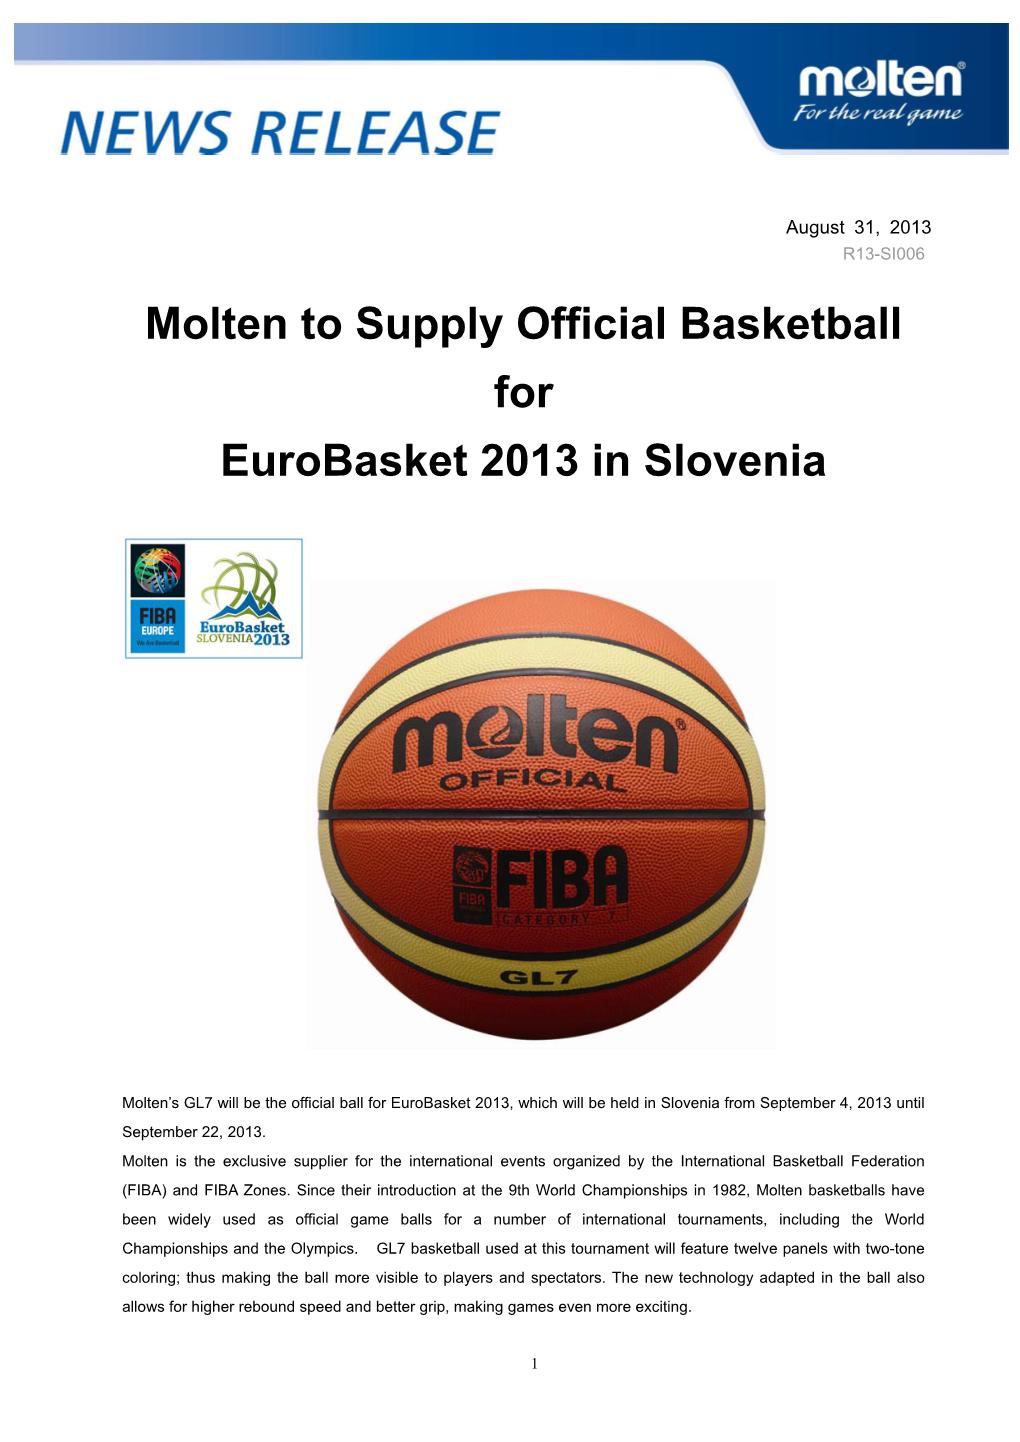 Molten to Supply Official Basketball for Eurobasket 2013 in Slovenia(PDF